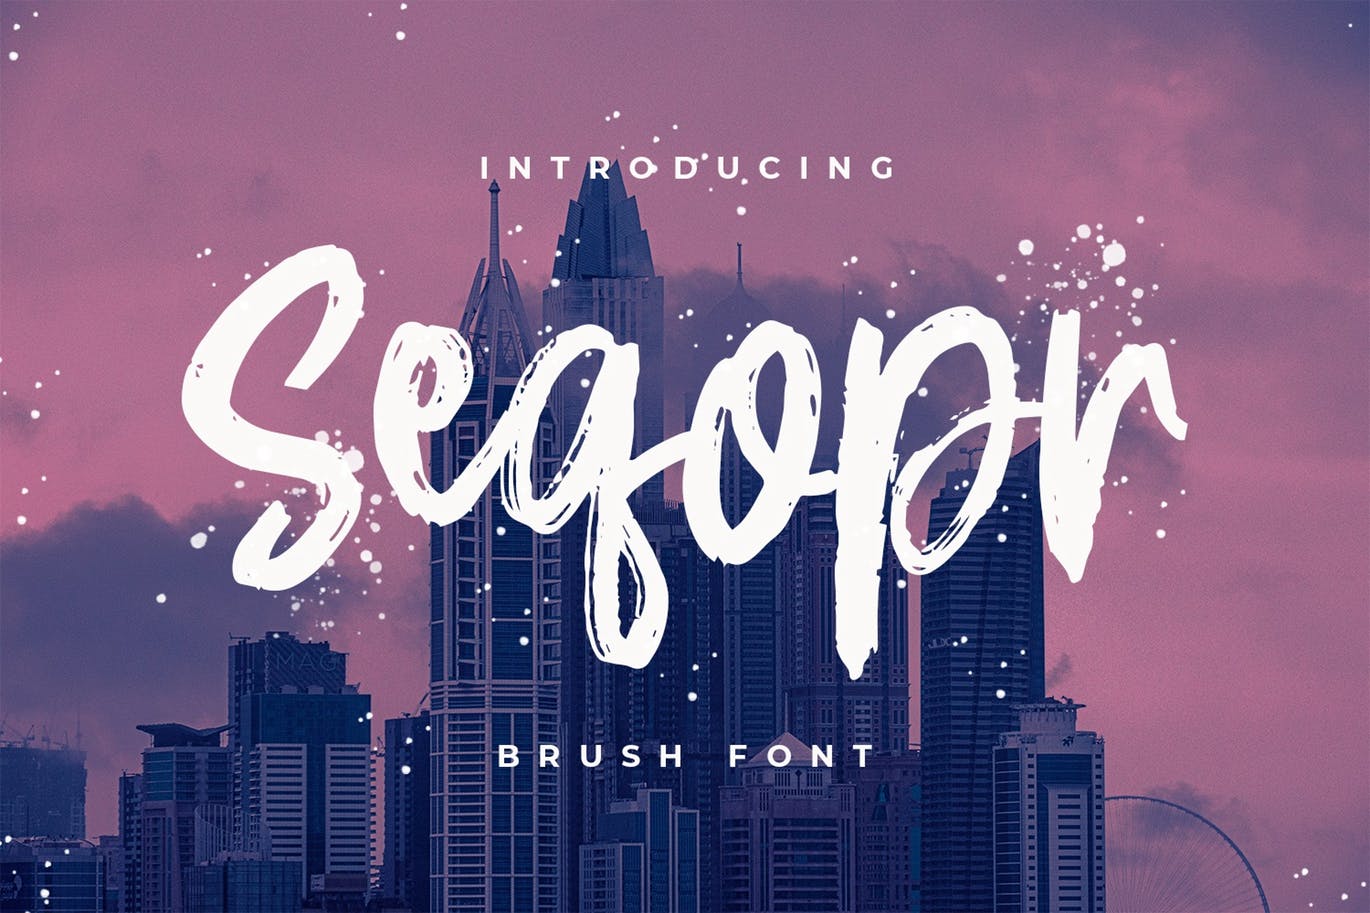 Logo/印刷设计英文笔刷字体16素材精选 Seqopr – The Brush Font插图